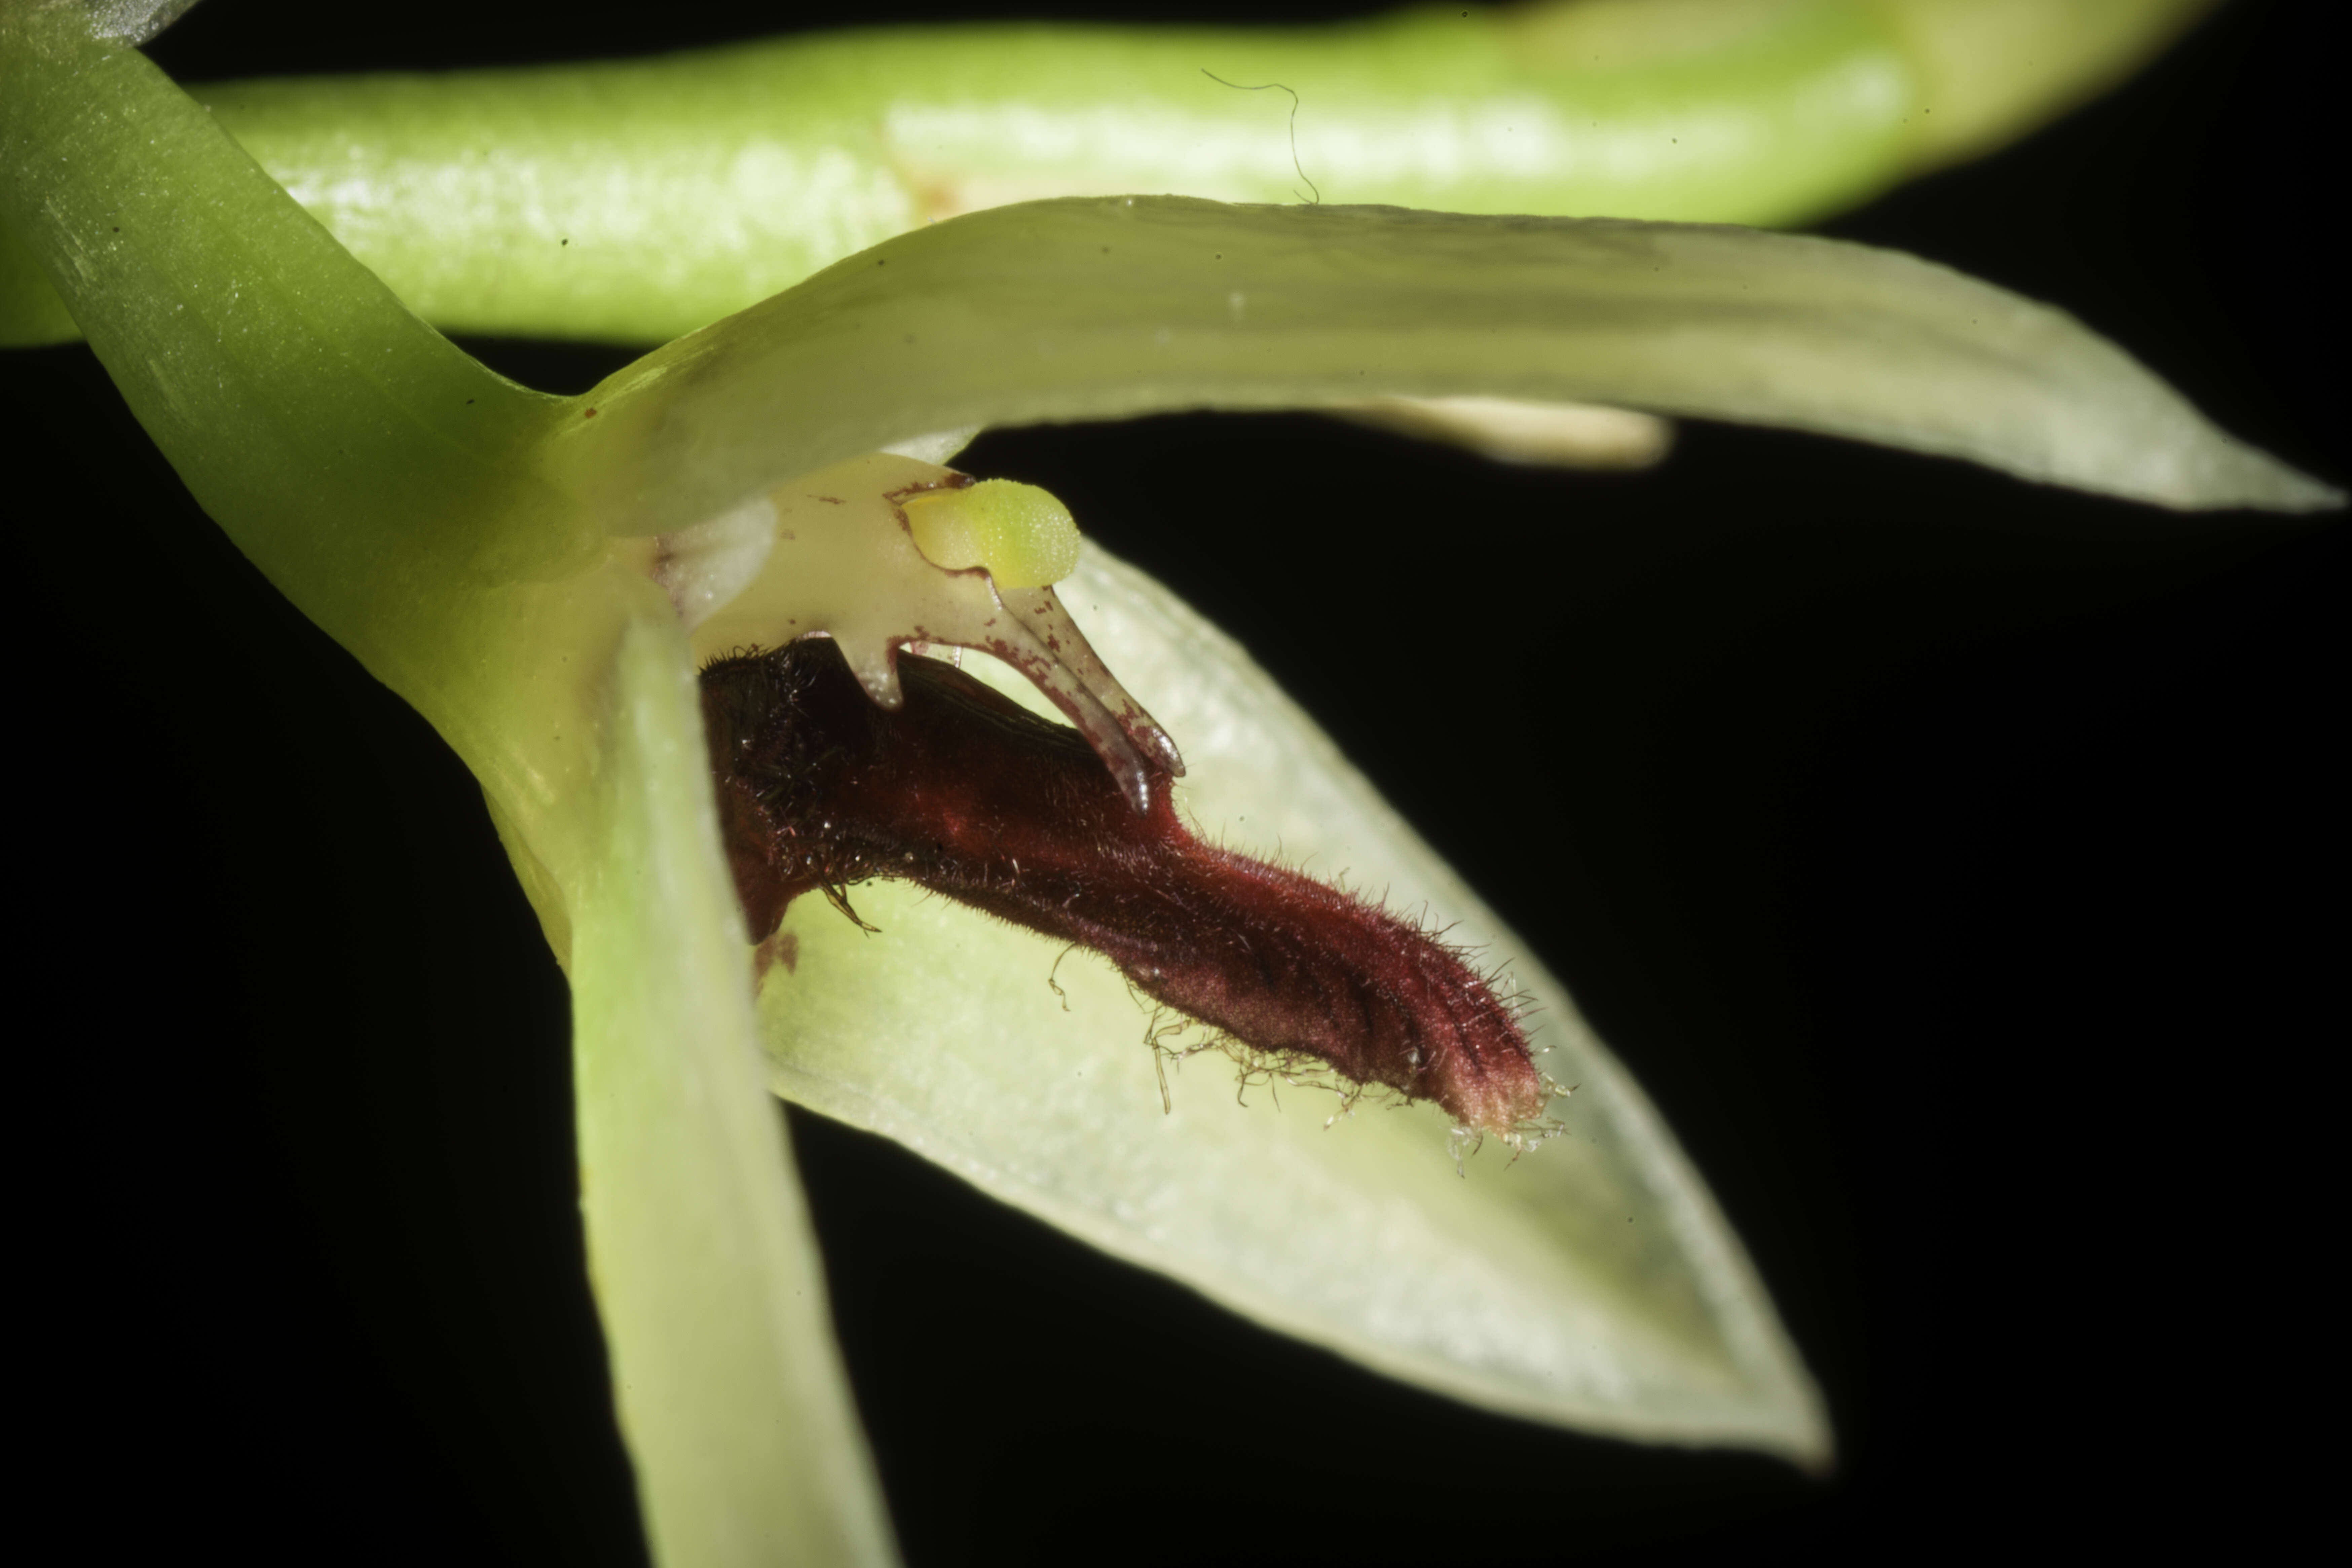 Image of Bulbophyllum tripetalum Lindl.